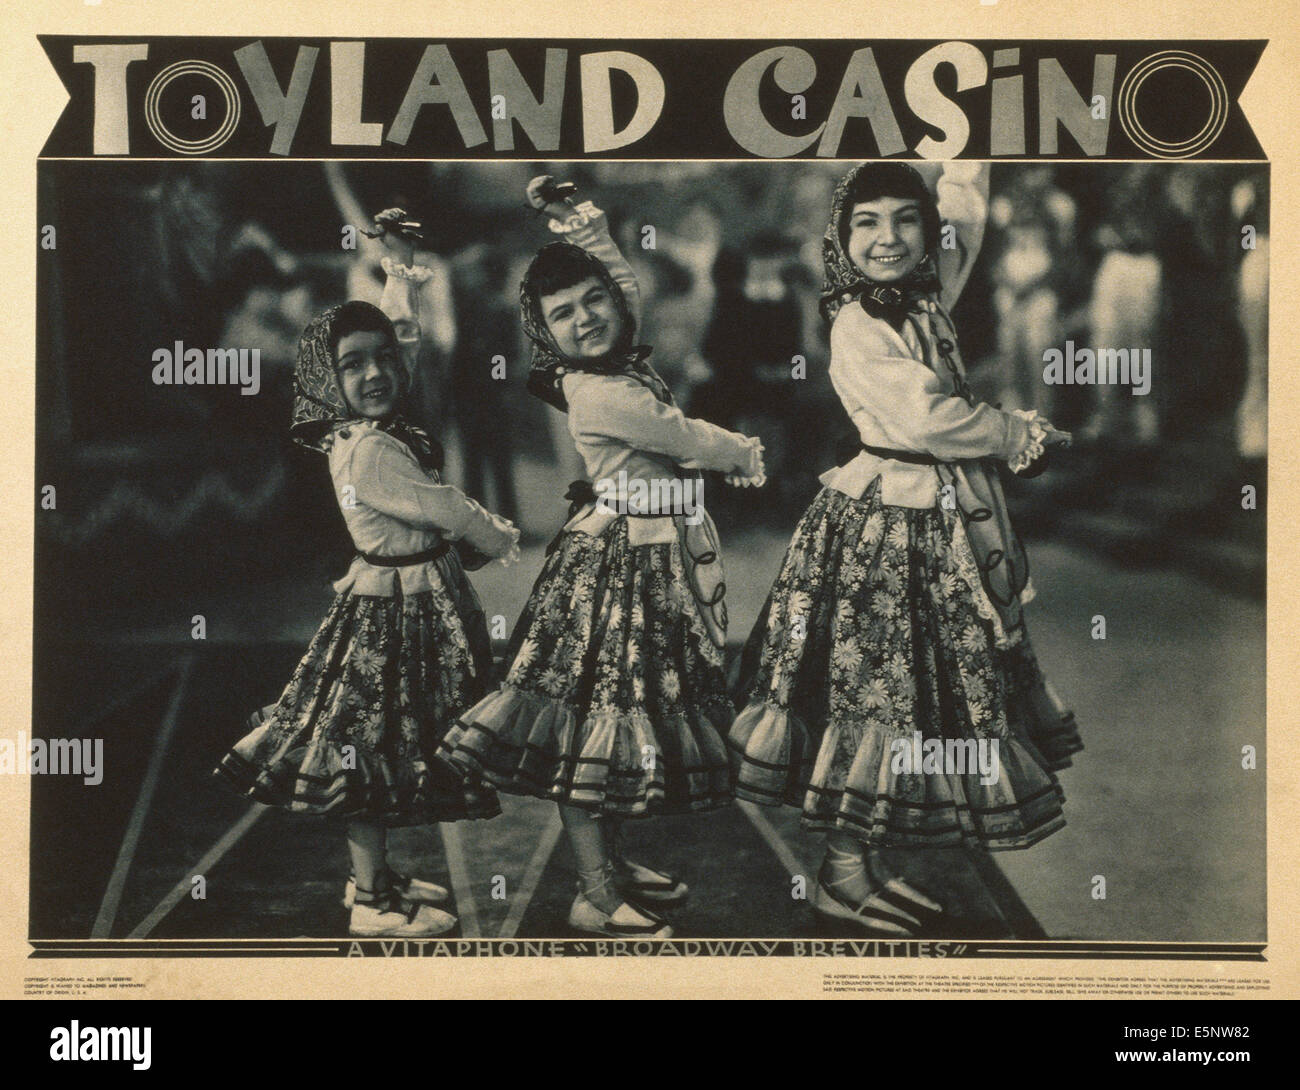 TOYLAND CASINO, US lobbycard, 1938 Stock Photo